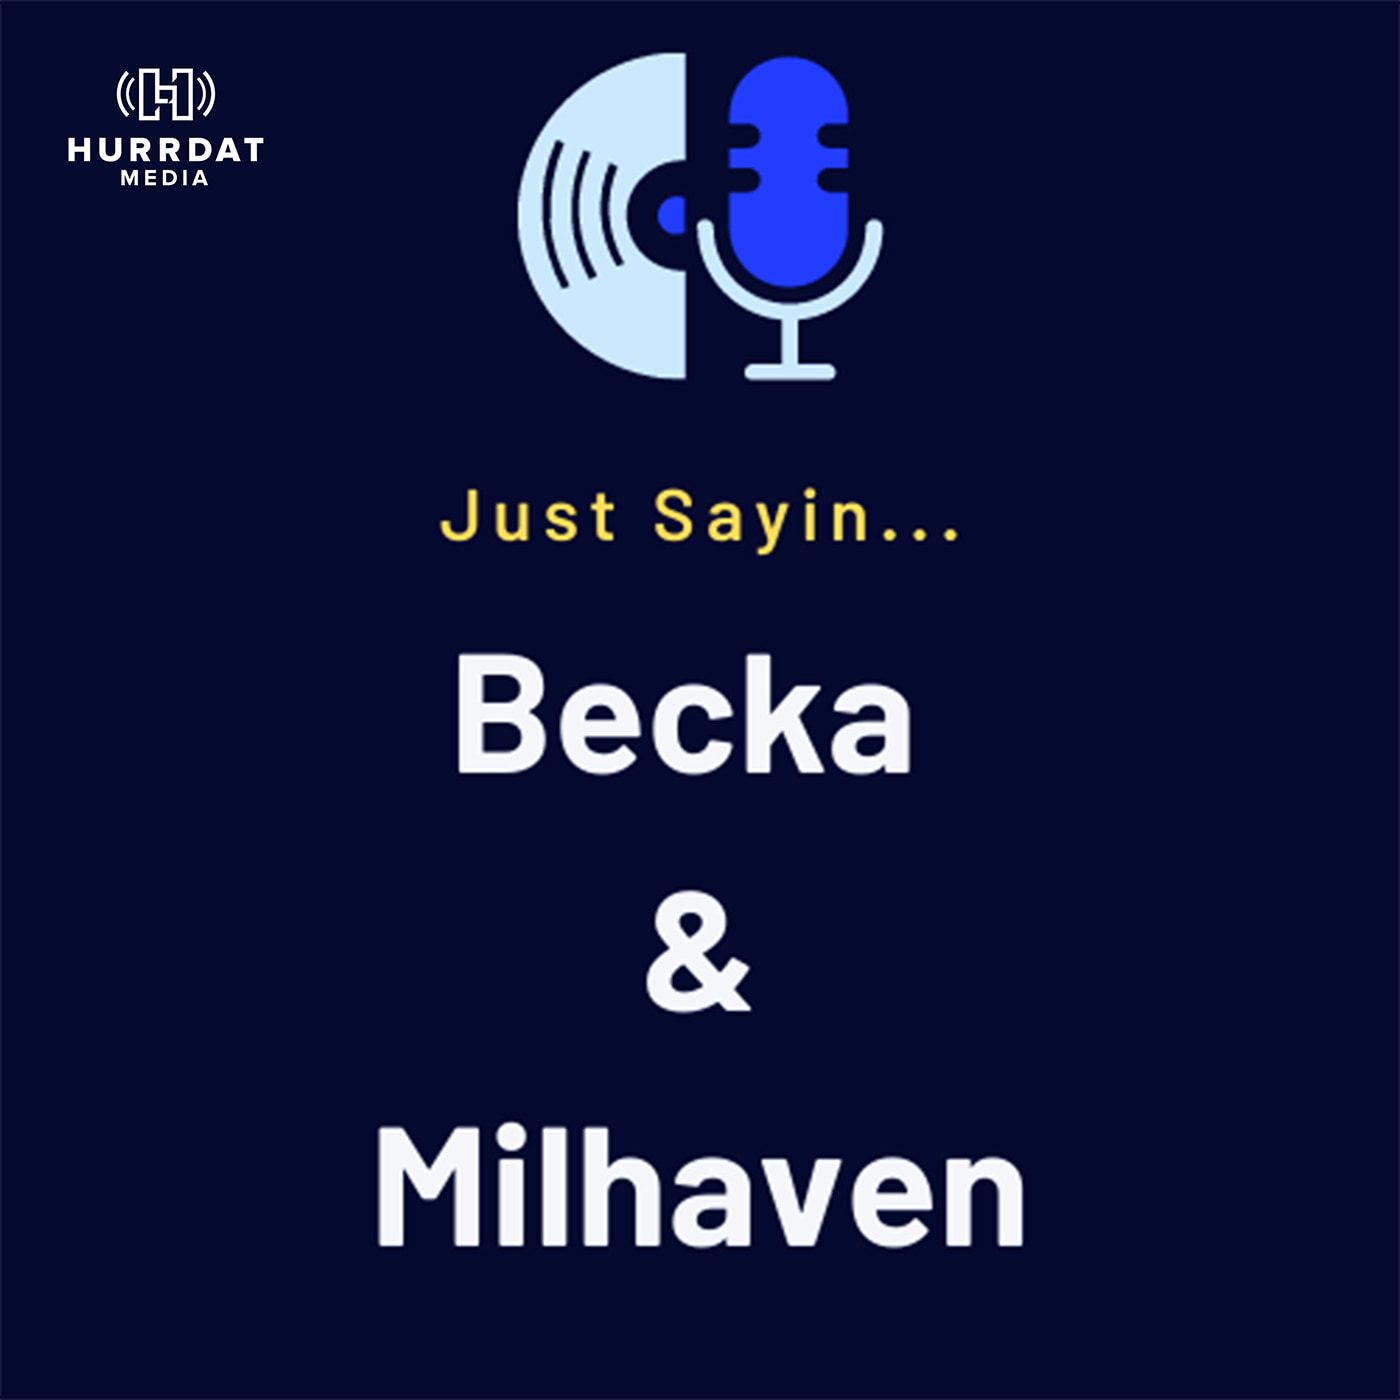 Just Sayin...Becka & Milhaven